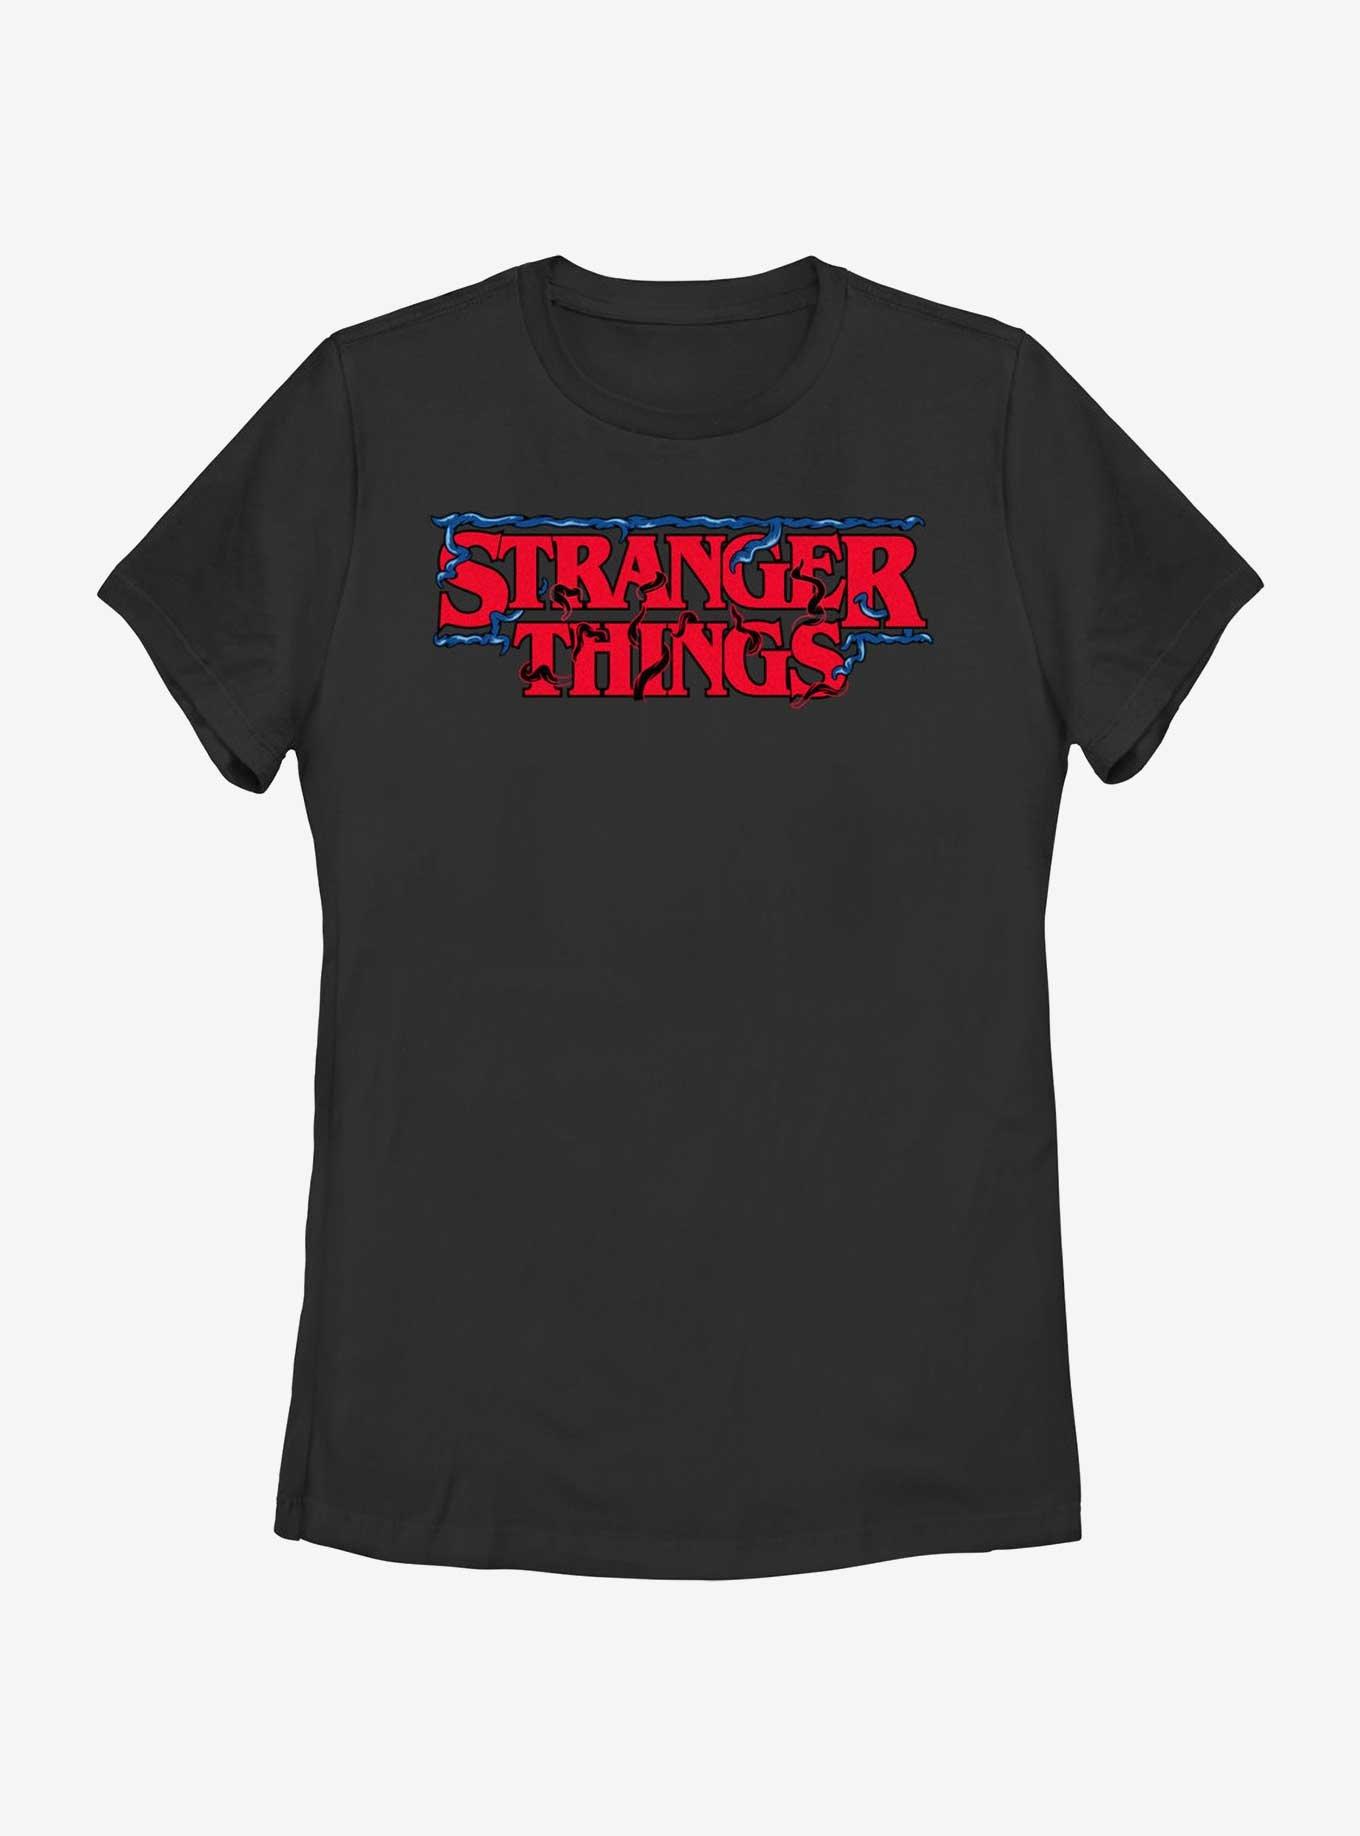 Stranger Things Intertwined Vines Logo Womens T-Shirt, BLACK, hi-res